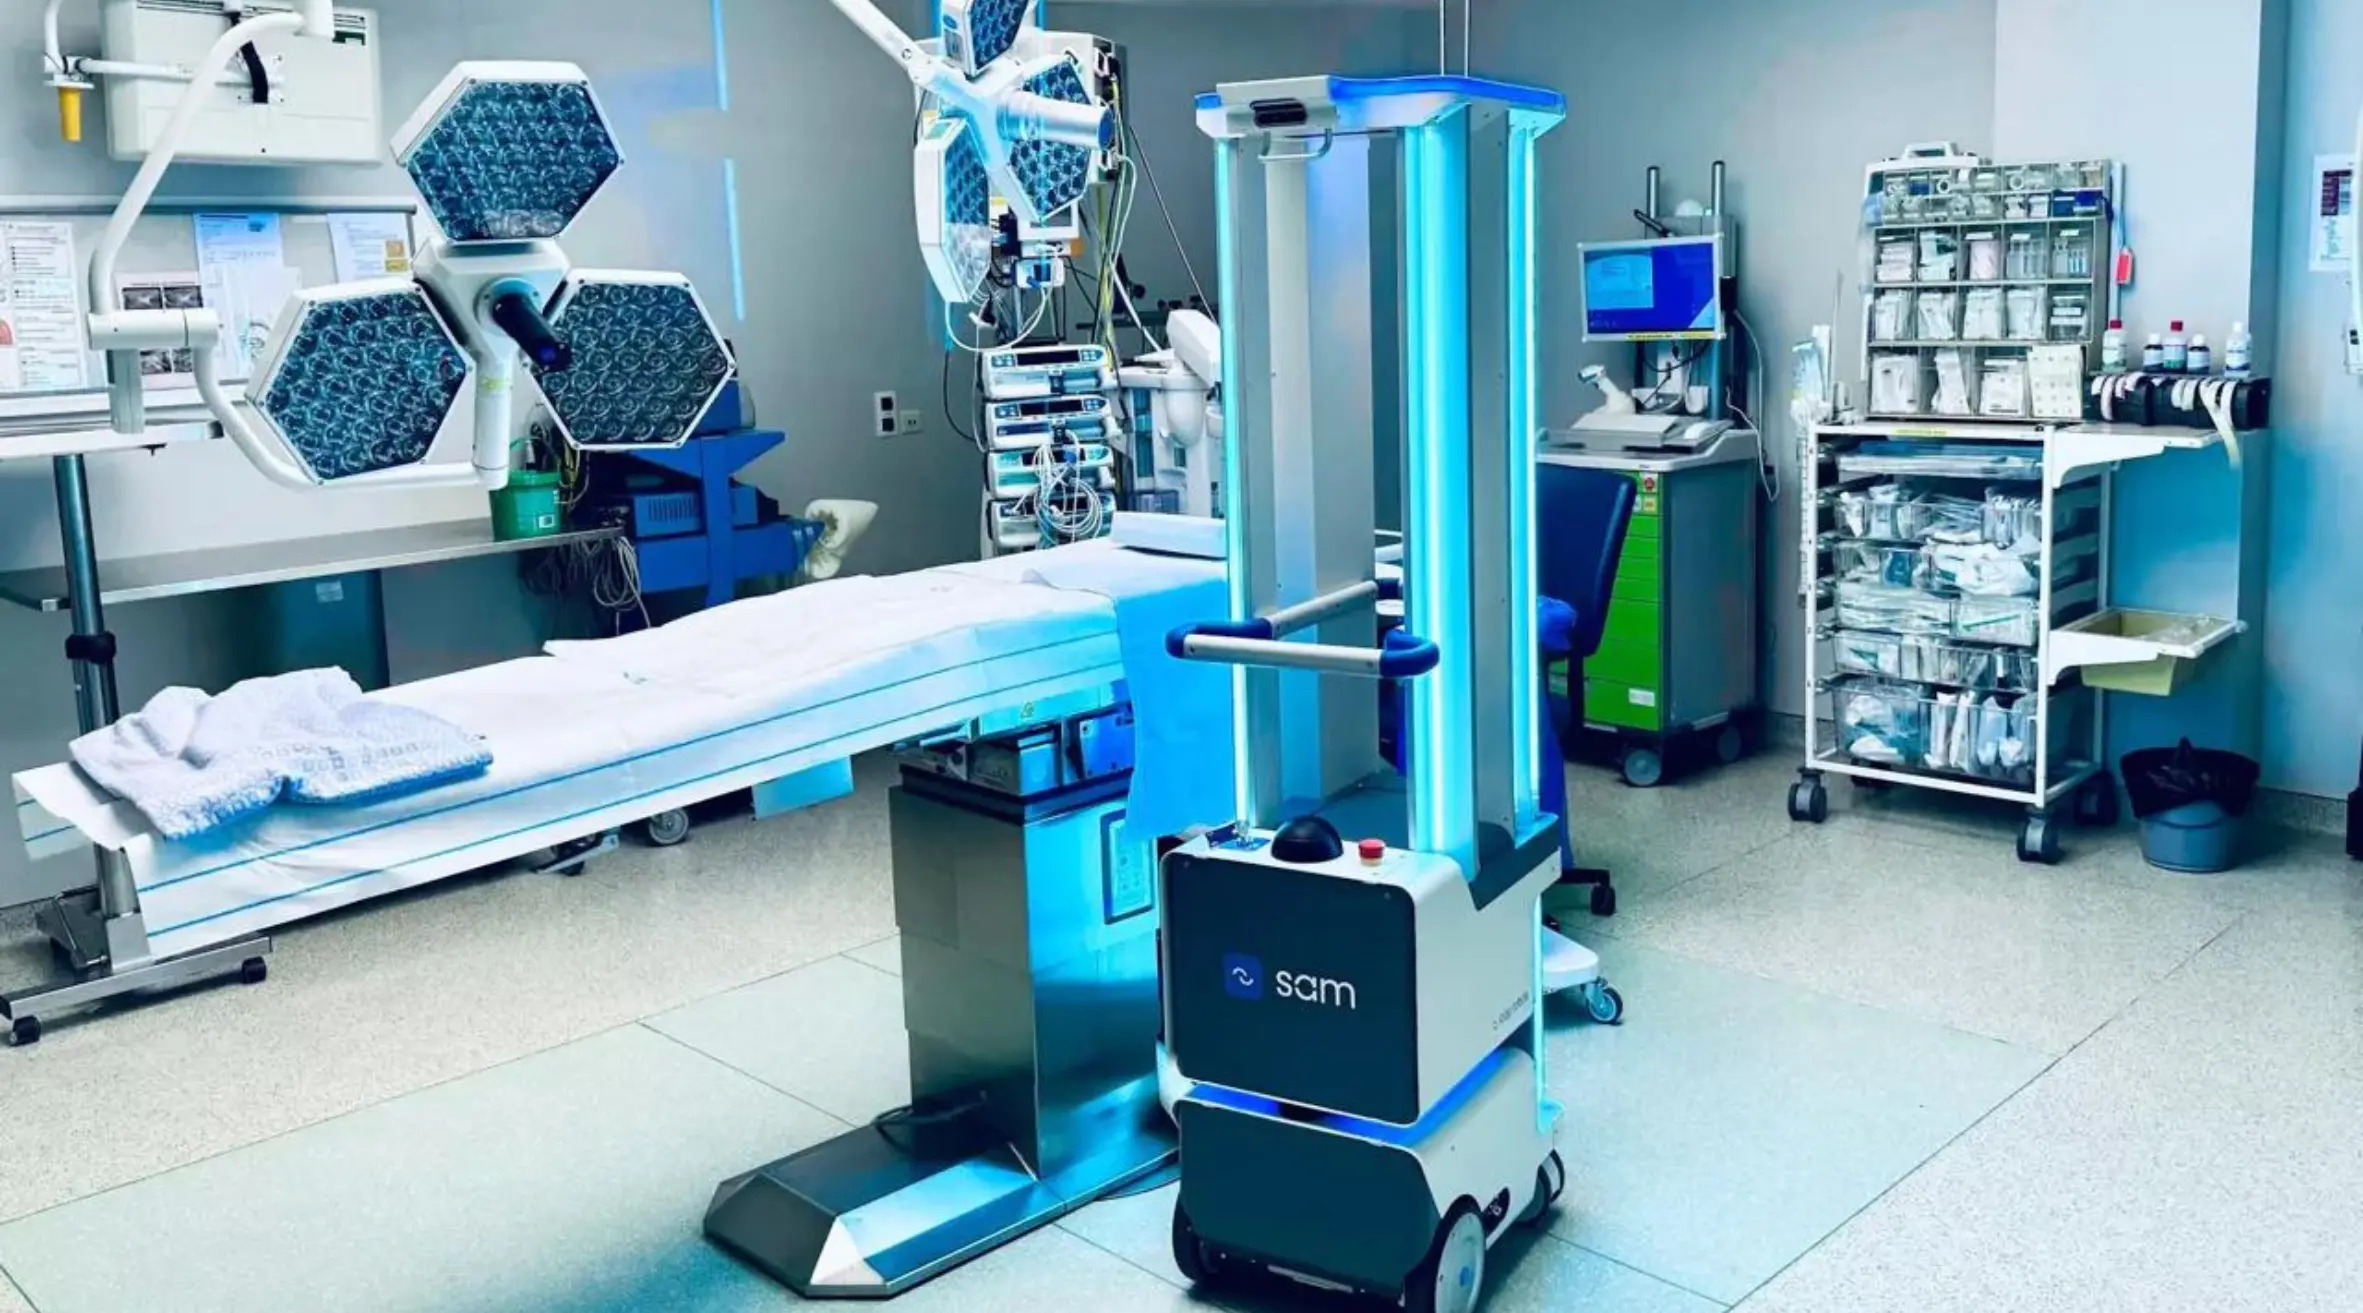 Ghent University Hospital Deploys UV-C Robot 'Sam' for Rapid, Chemical-Free Disinfection